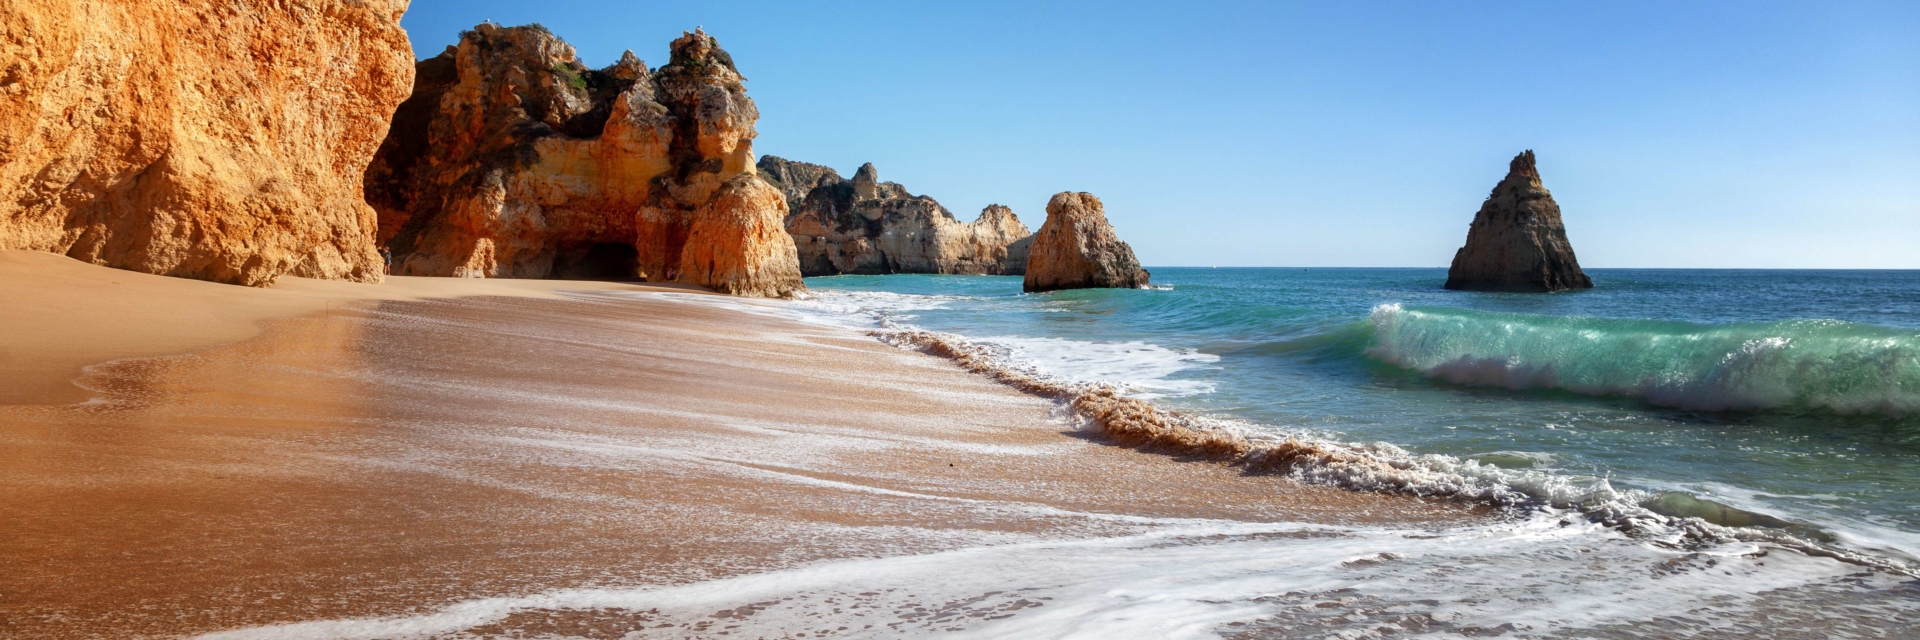 plage-falaises-algarve-portugal